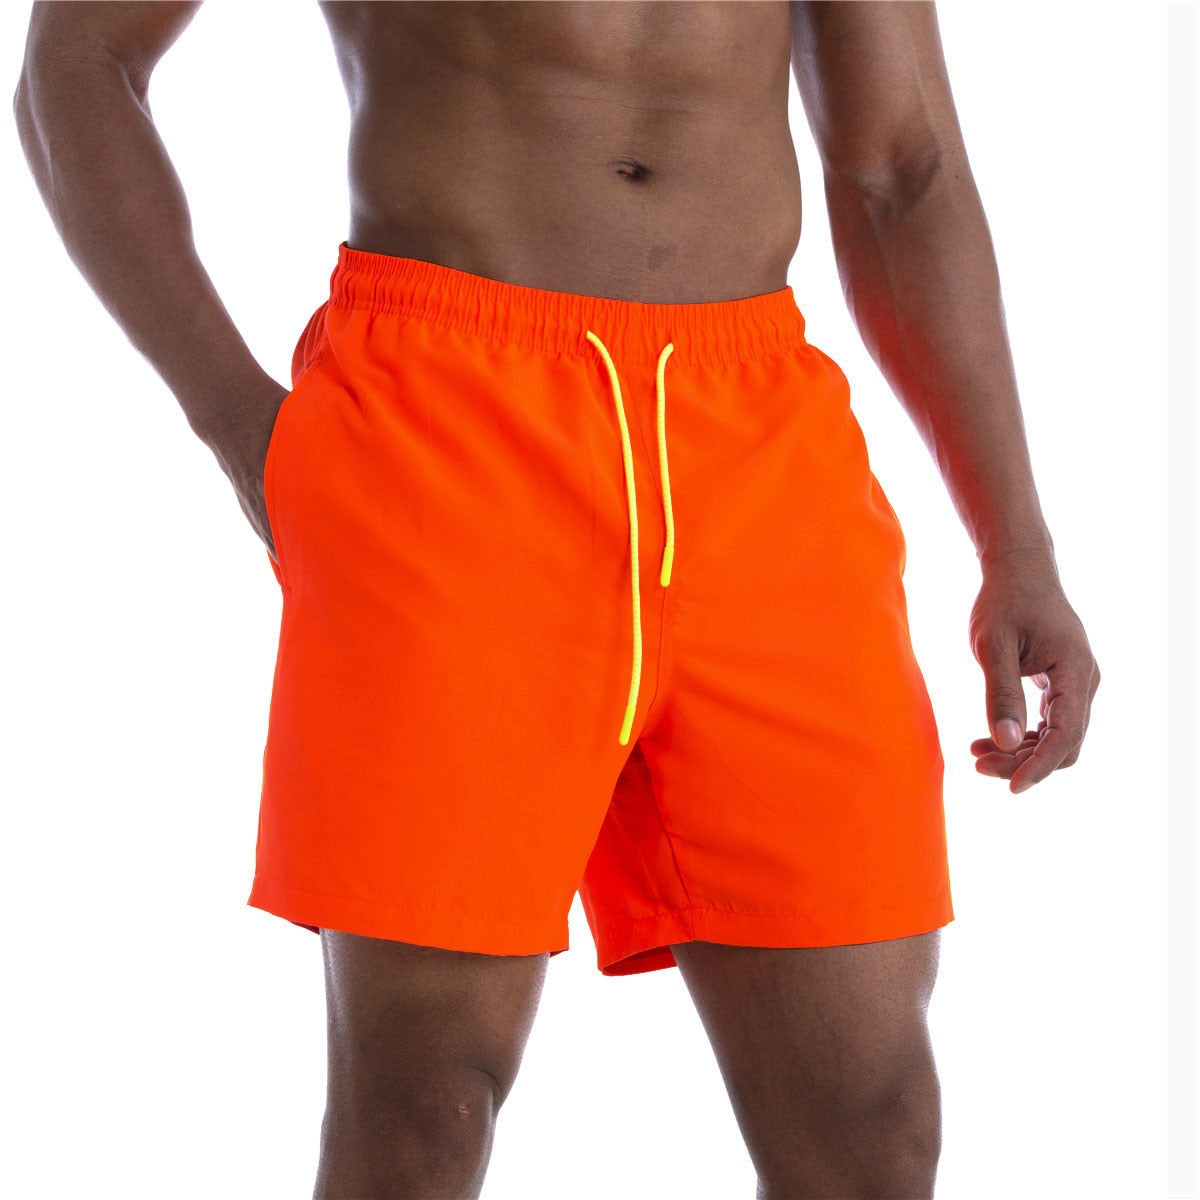 Compra orange02 Swimming Shorts for Men elastic waist and drawstring